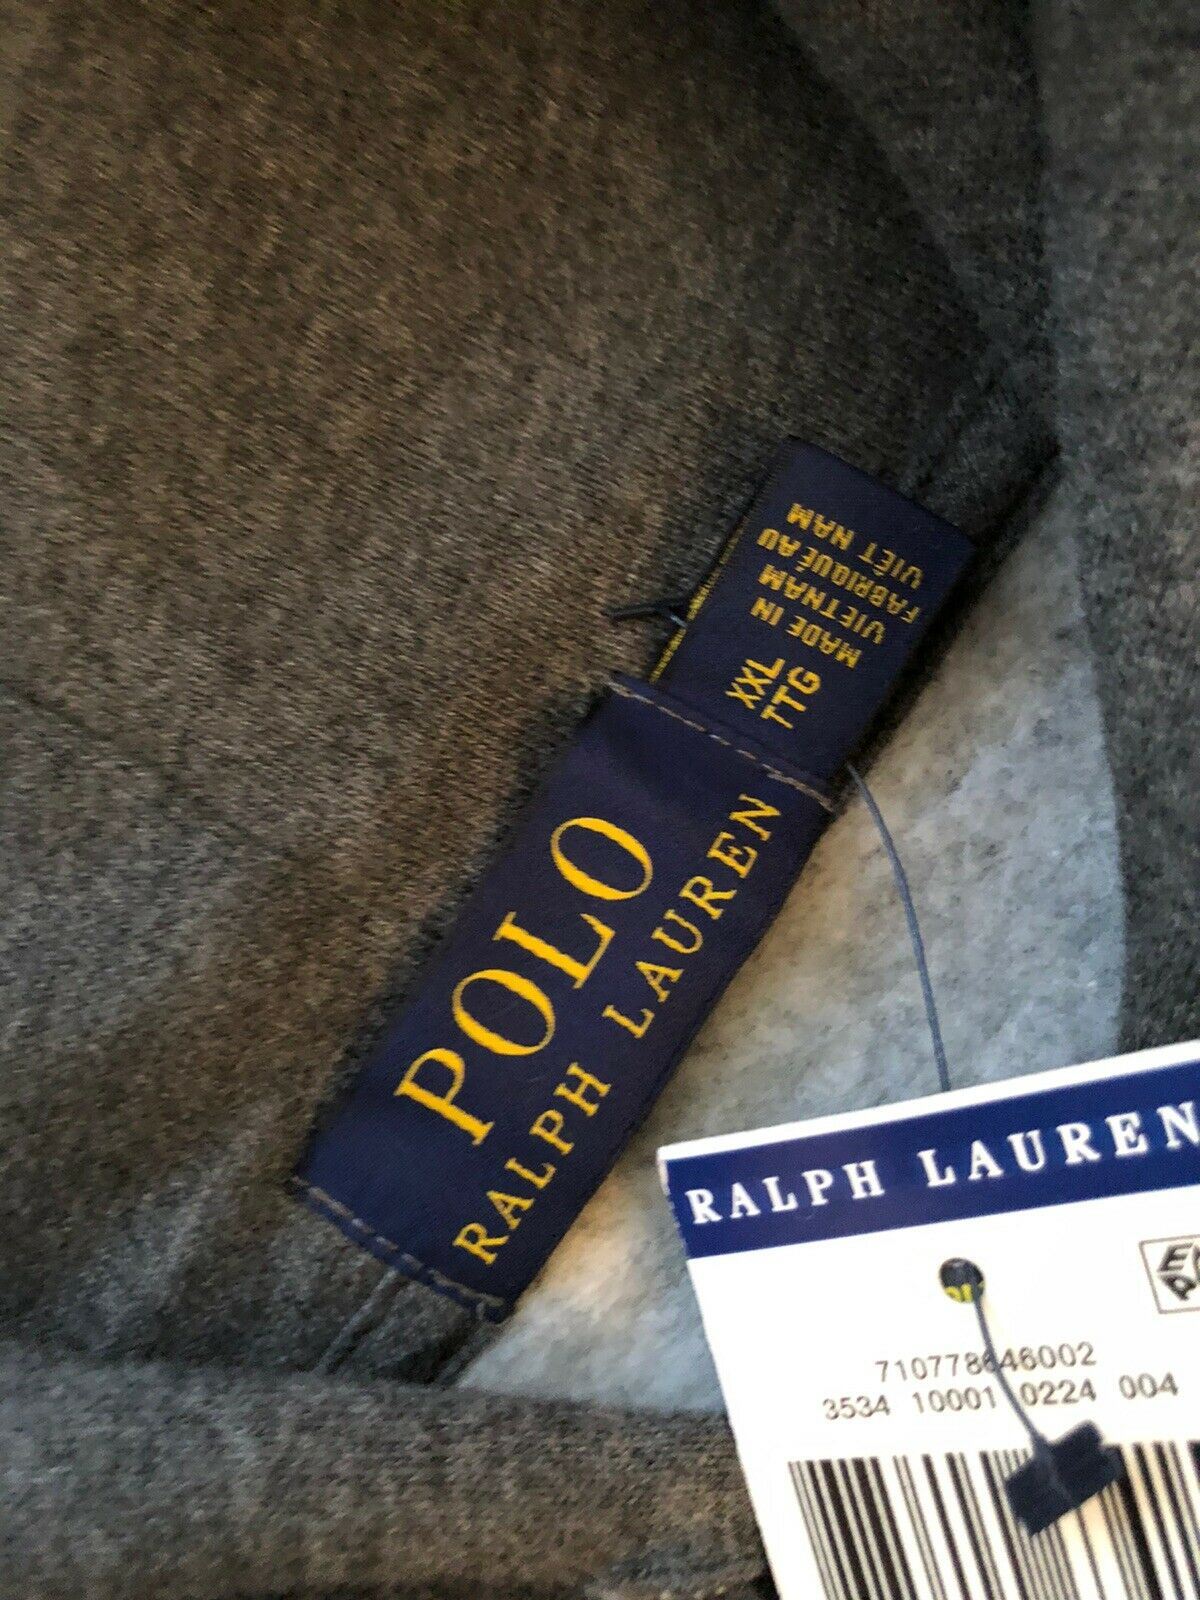 NWT $99.99 Polo Ralph Lauren Bear Gray Sweater with Hoodie 2XL